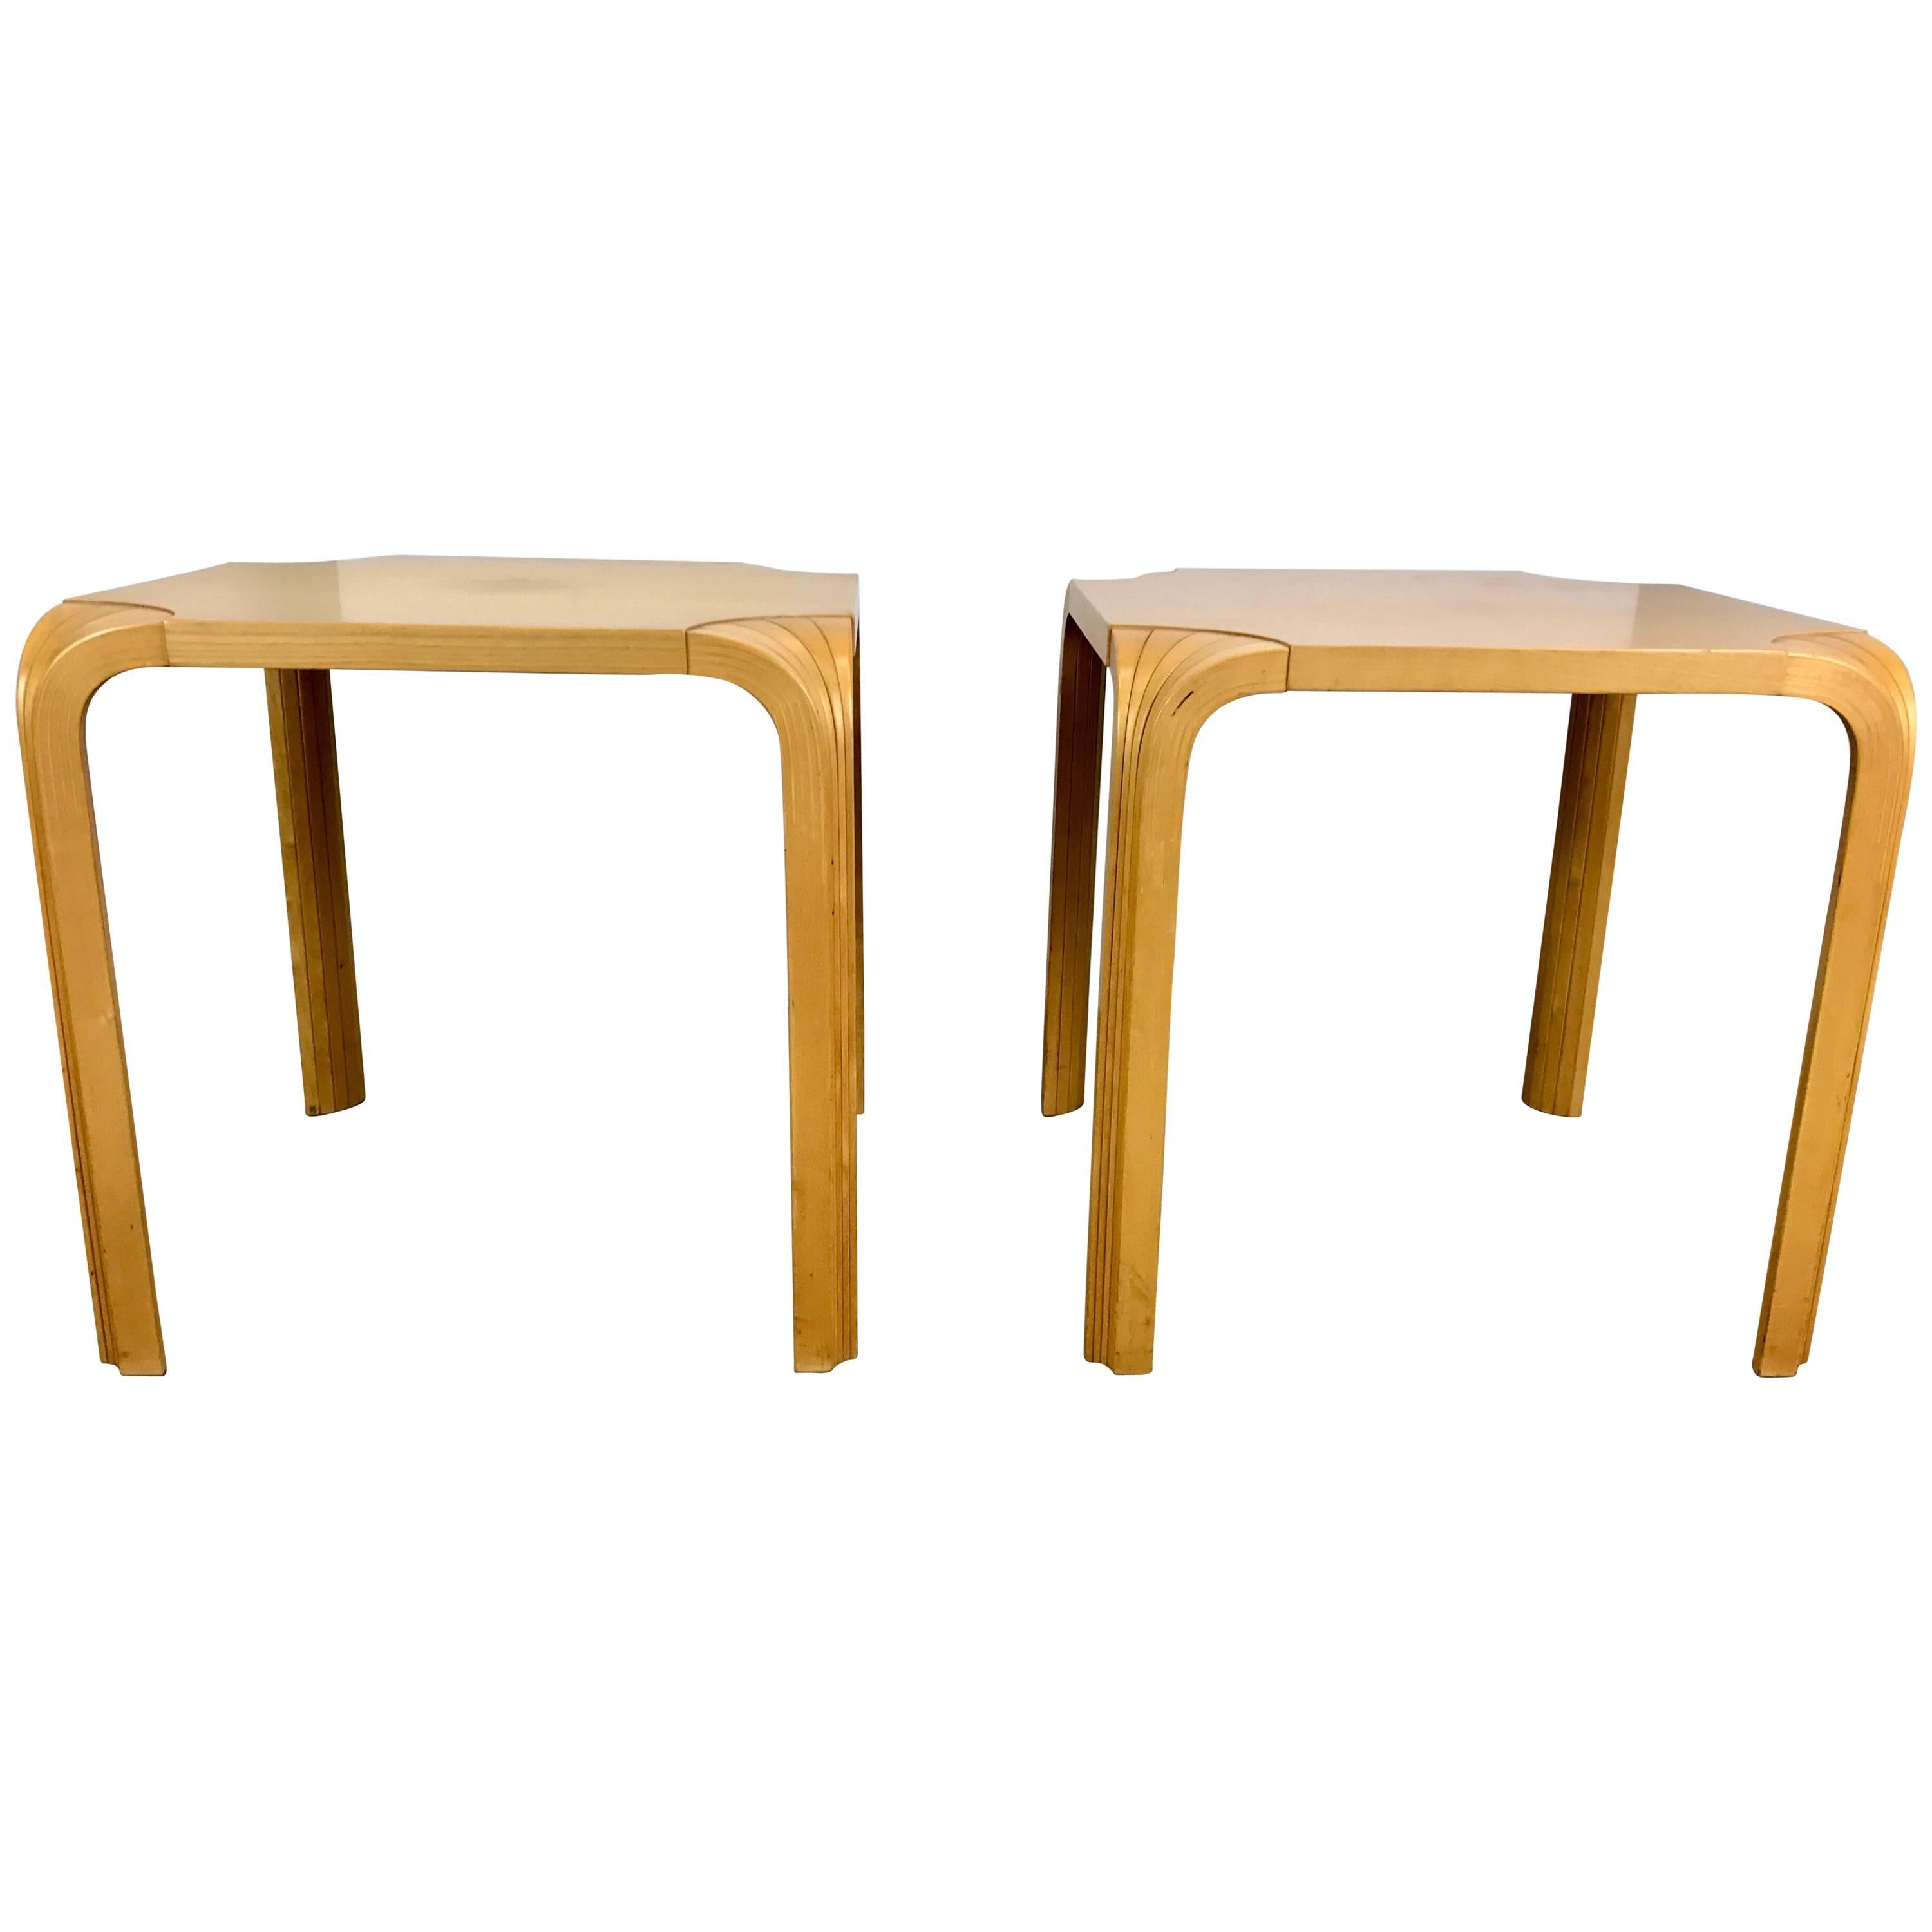 Pair of Vintage Fan Leg Stools or Tables by Alvar Aalto for Artek